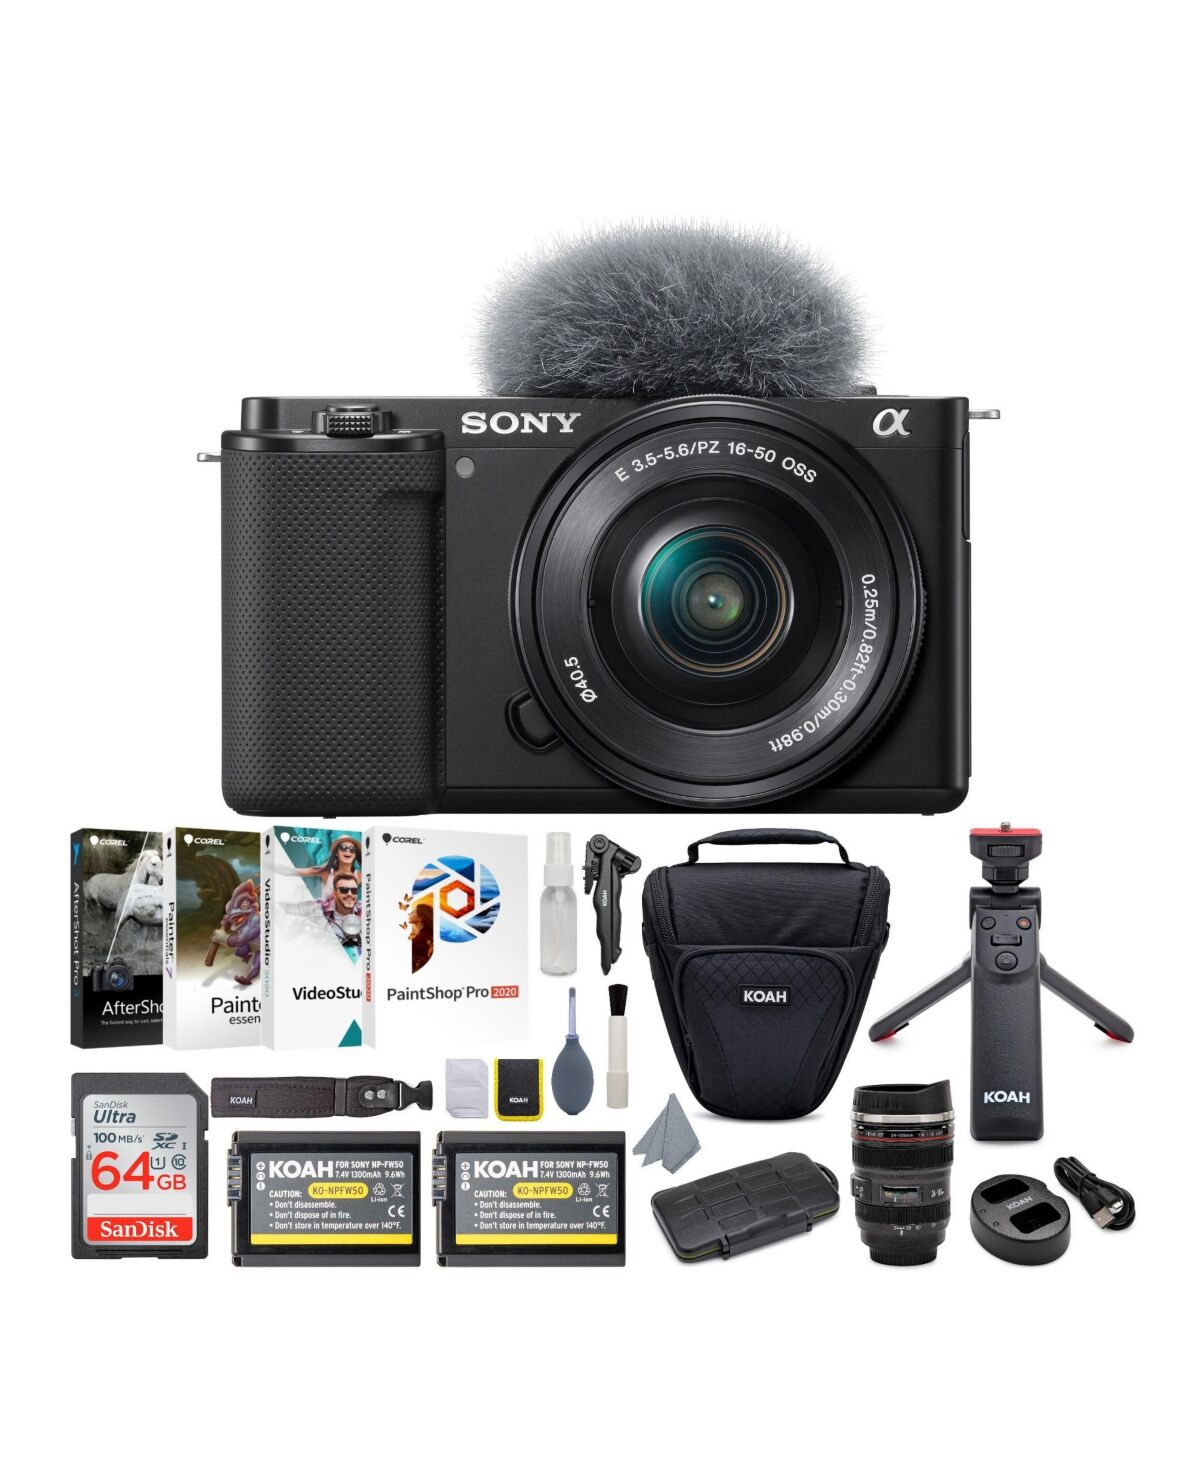 Sony Alpha Zv-E10 Aps-c Vlog Camera with Lens (Black) Content Creator's Bundle - Black